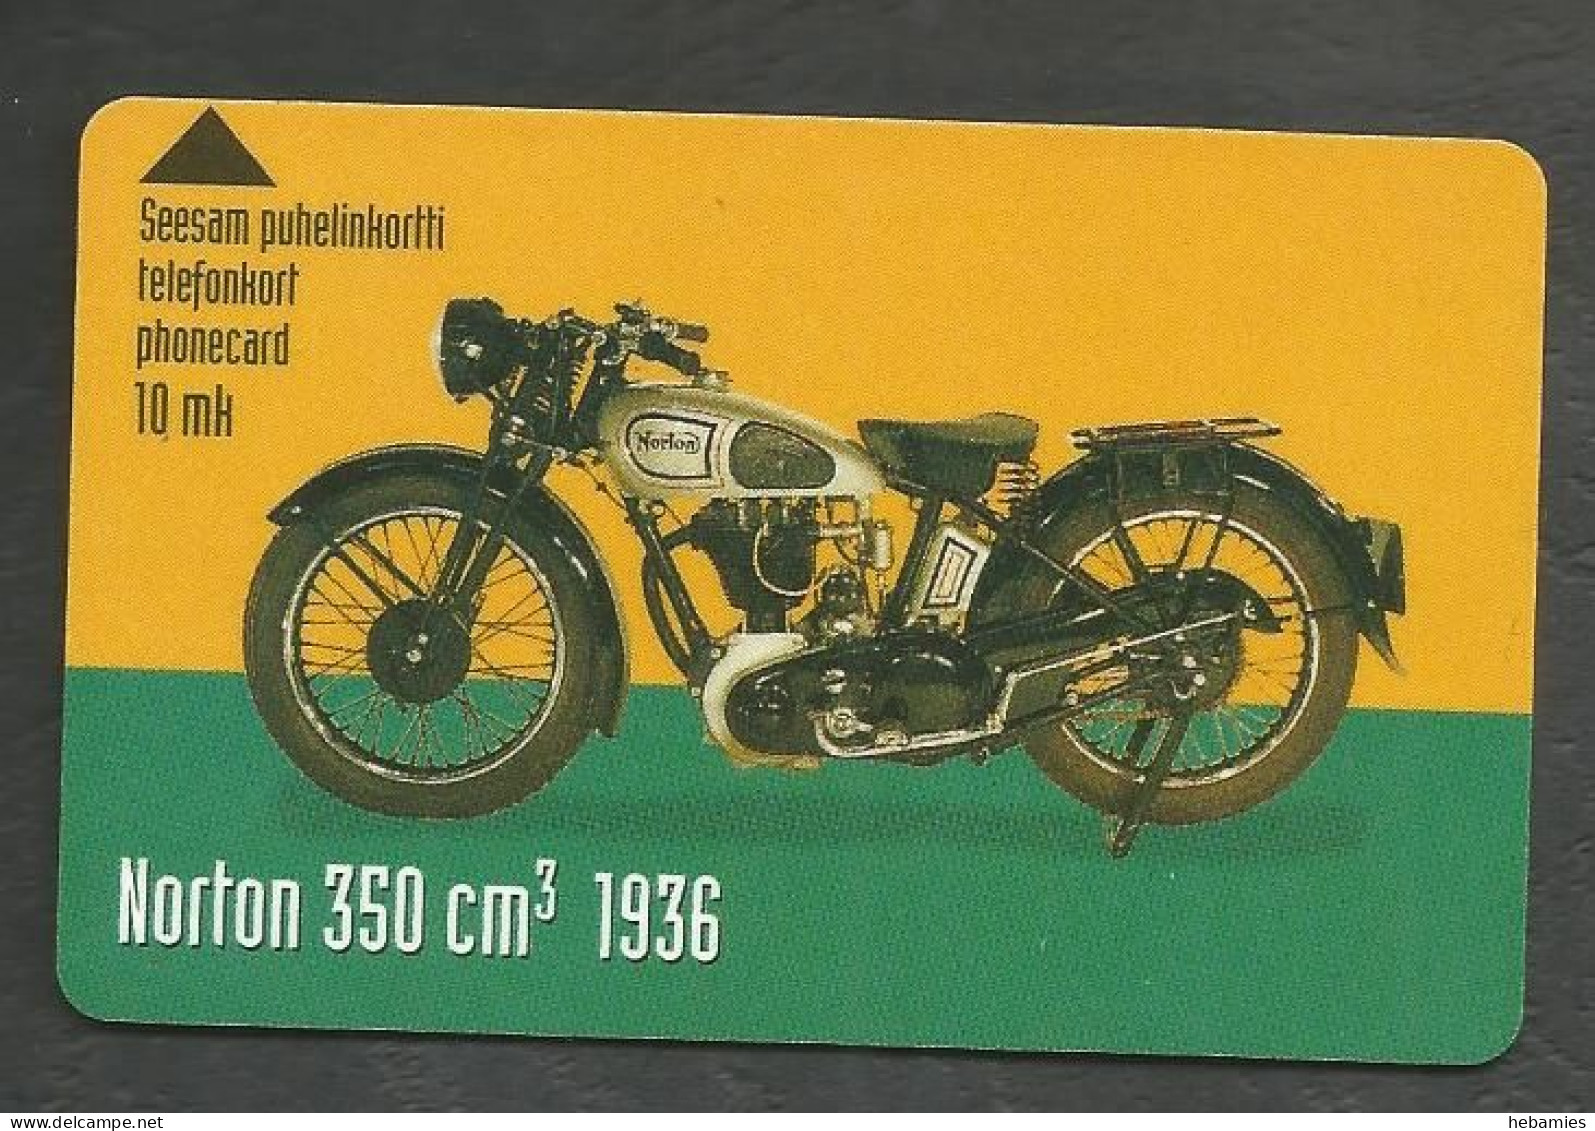 NORTON 350 Cm3 1936 - Magnetic Card -  10 FIM  FINNET - FINLAND - - Motorfietsen